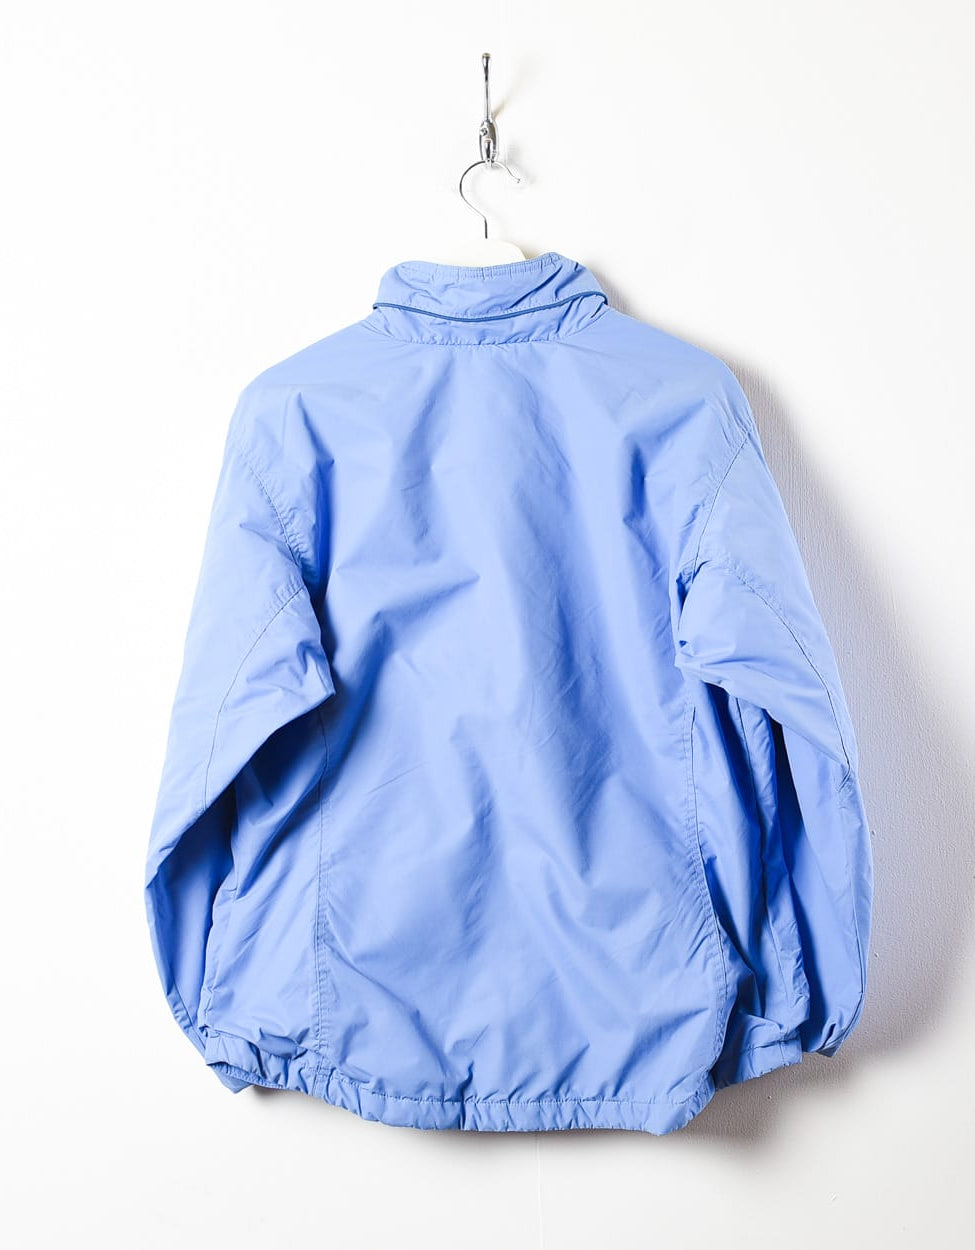 Blue Levi's Denim Jacket - Small Women's